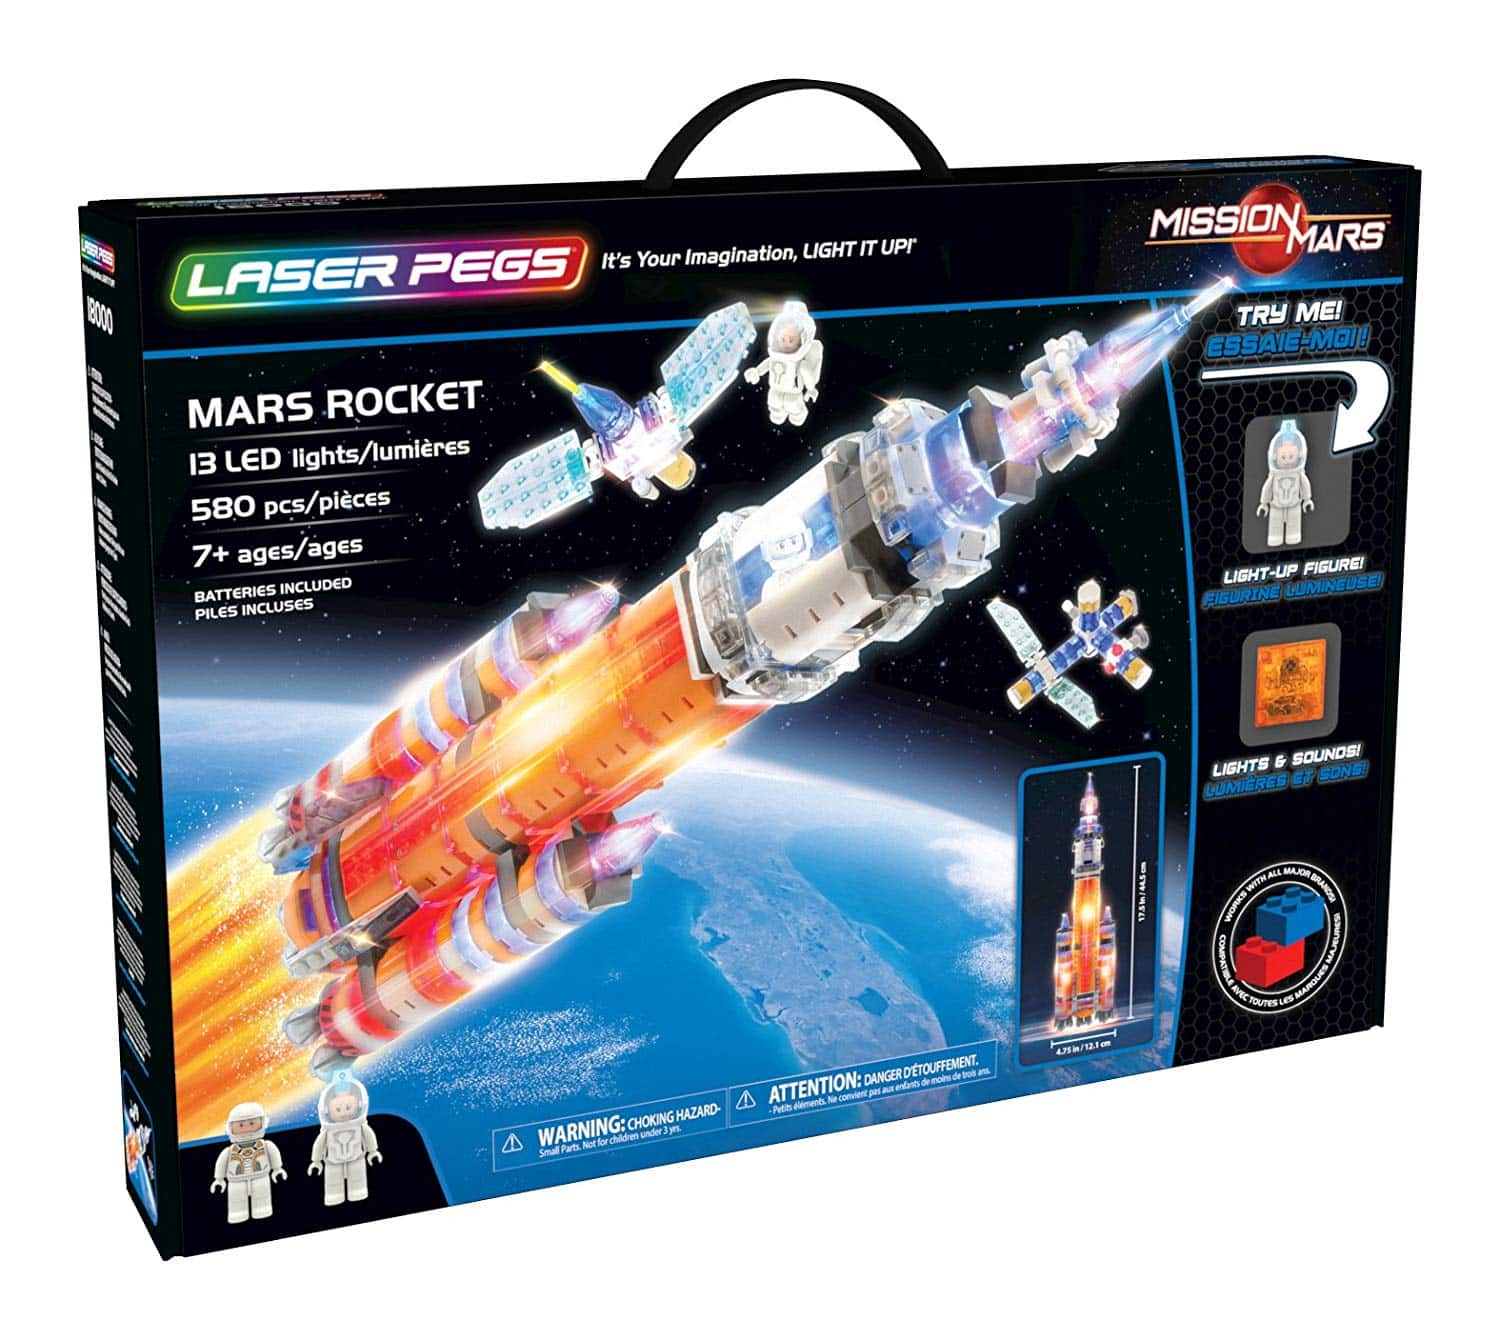 DEAL ALERT: Laser Pegs Mars Rocket Light-Up Building Block Playset 40% off!